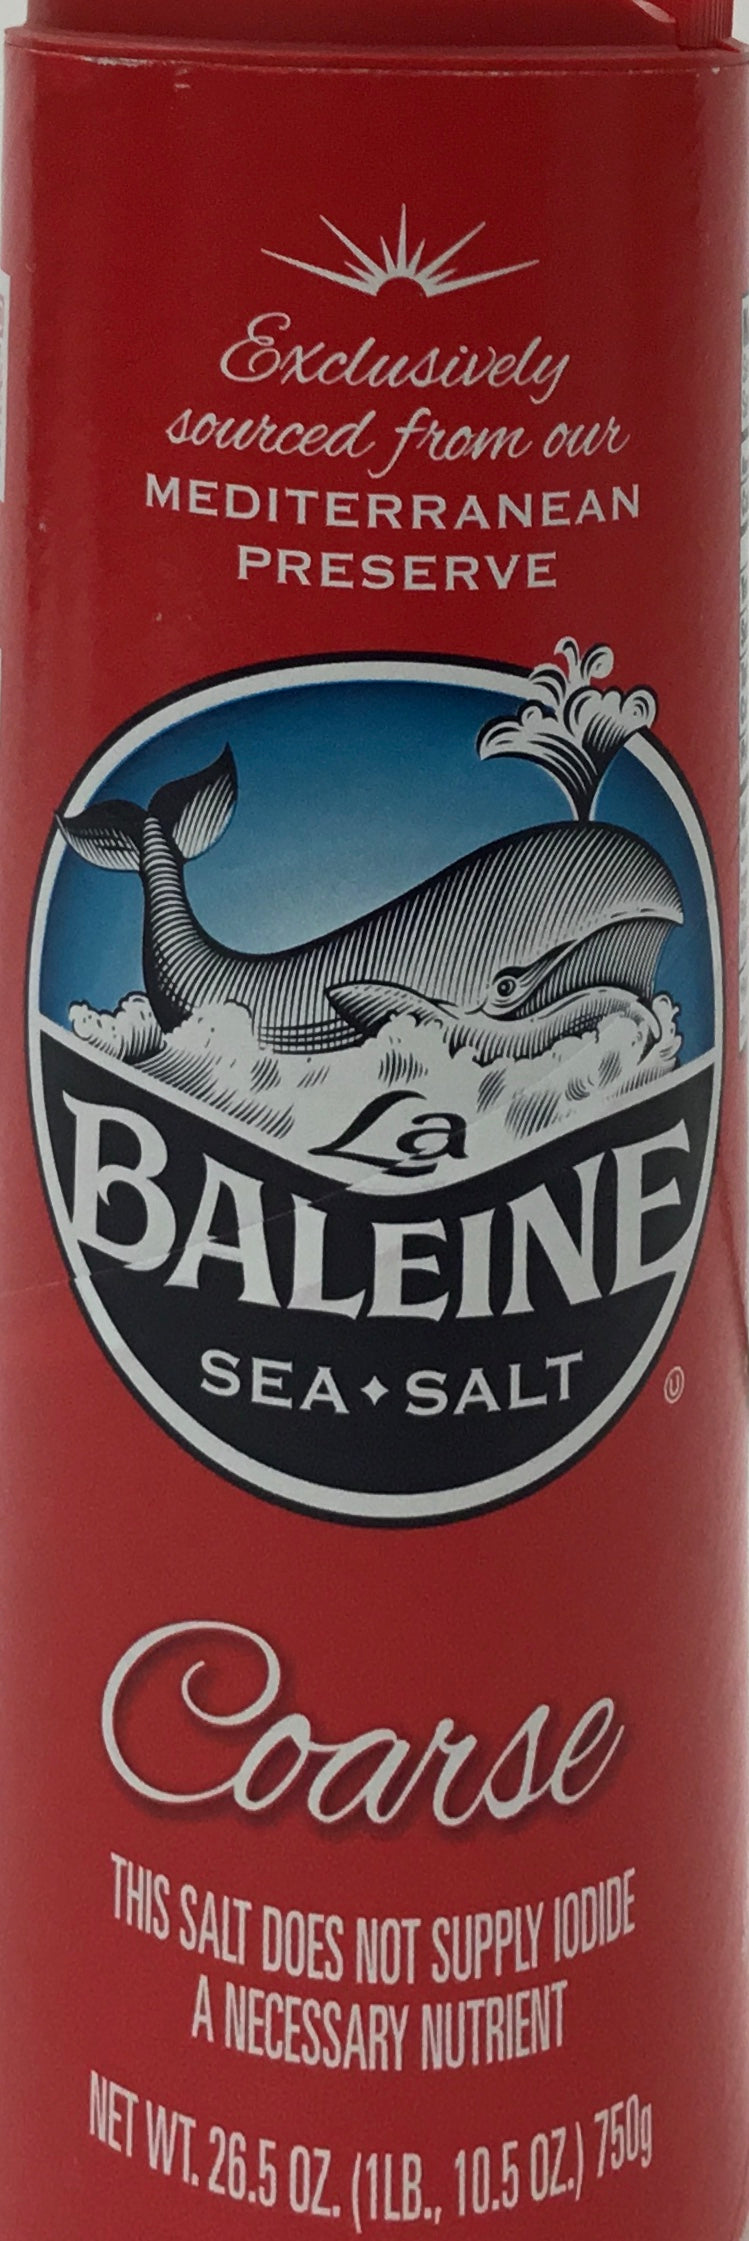 Coarse Sea Salt, La Baleine